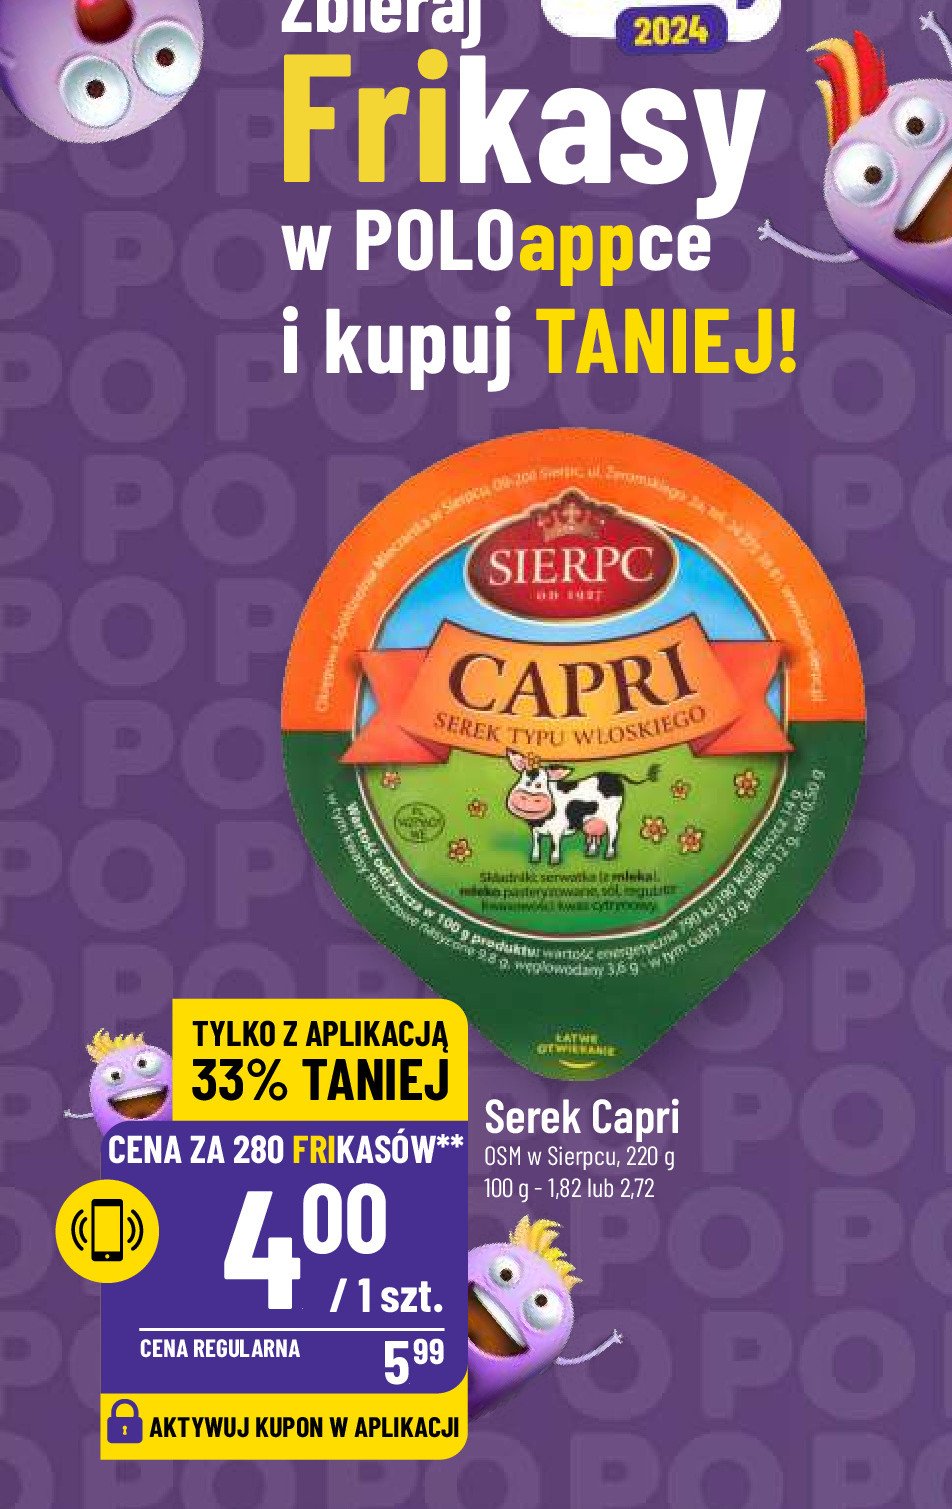 Serek Sierpc capri promocja